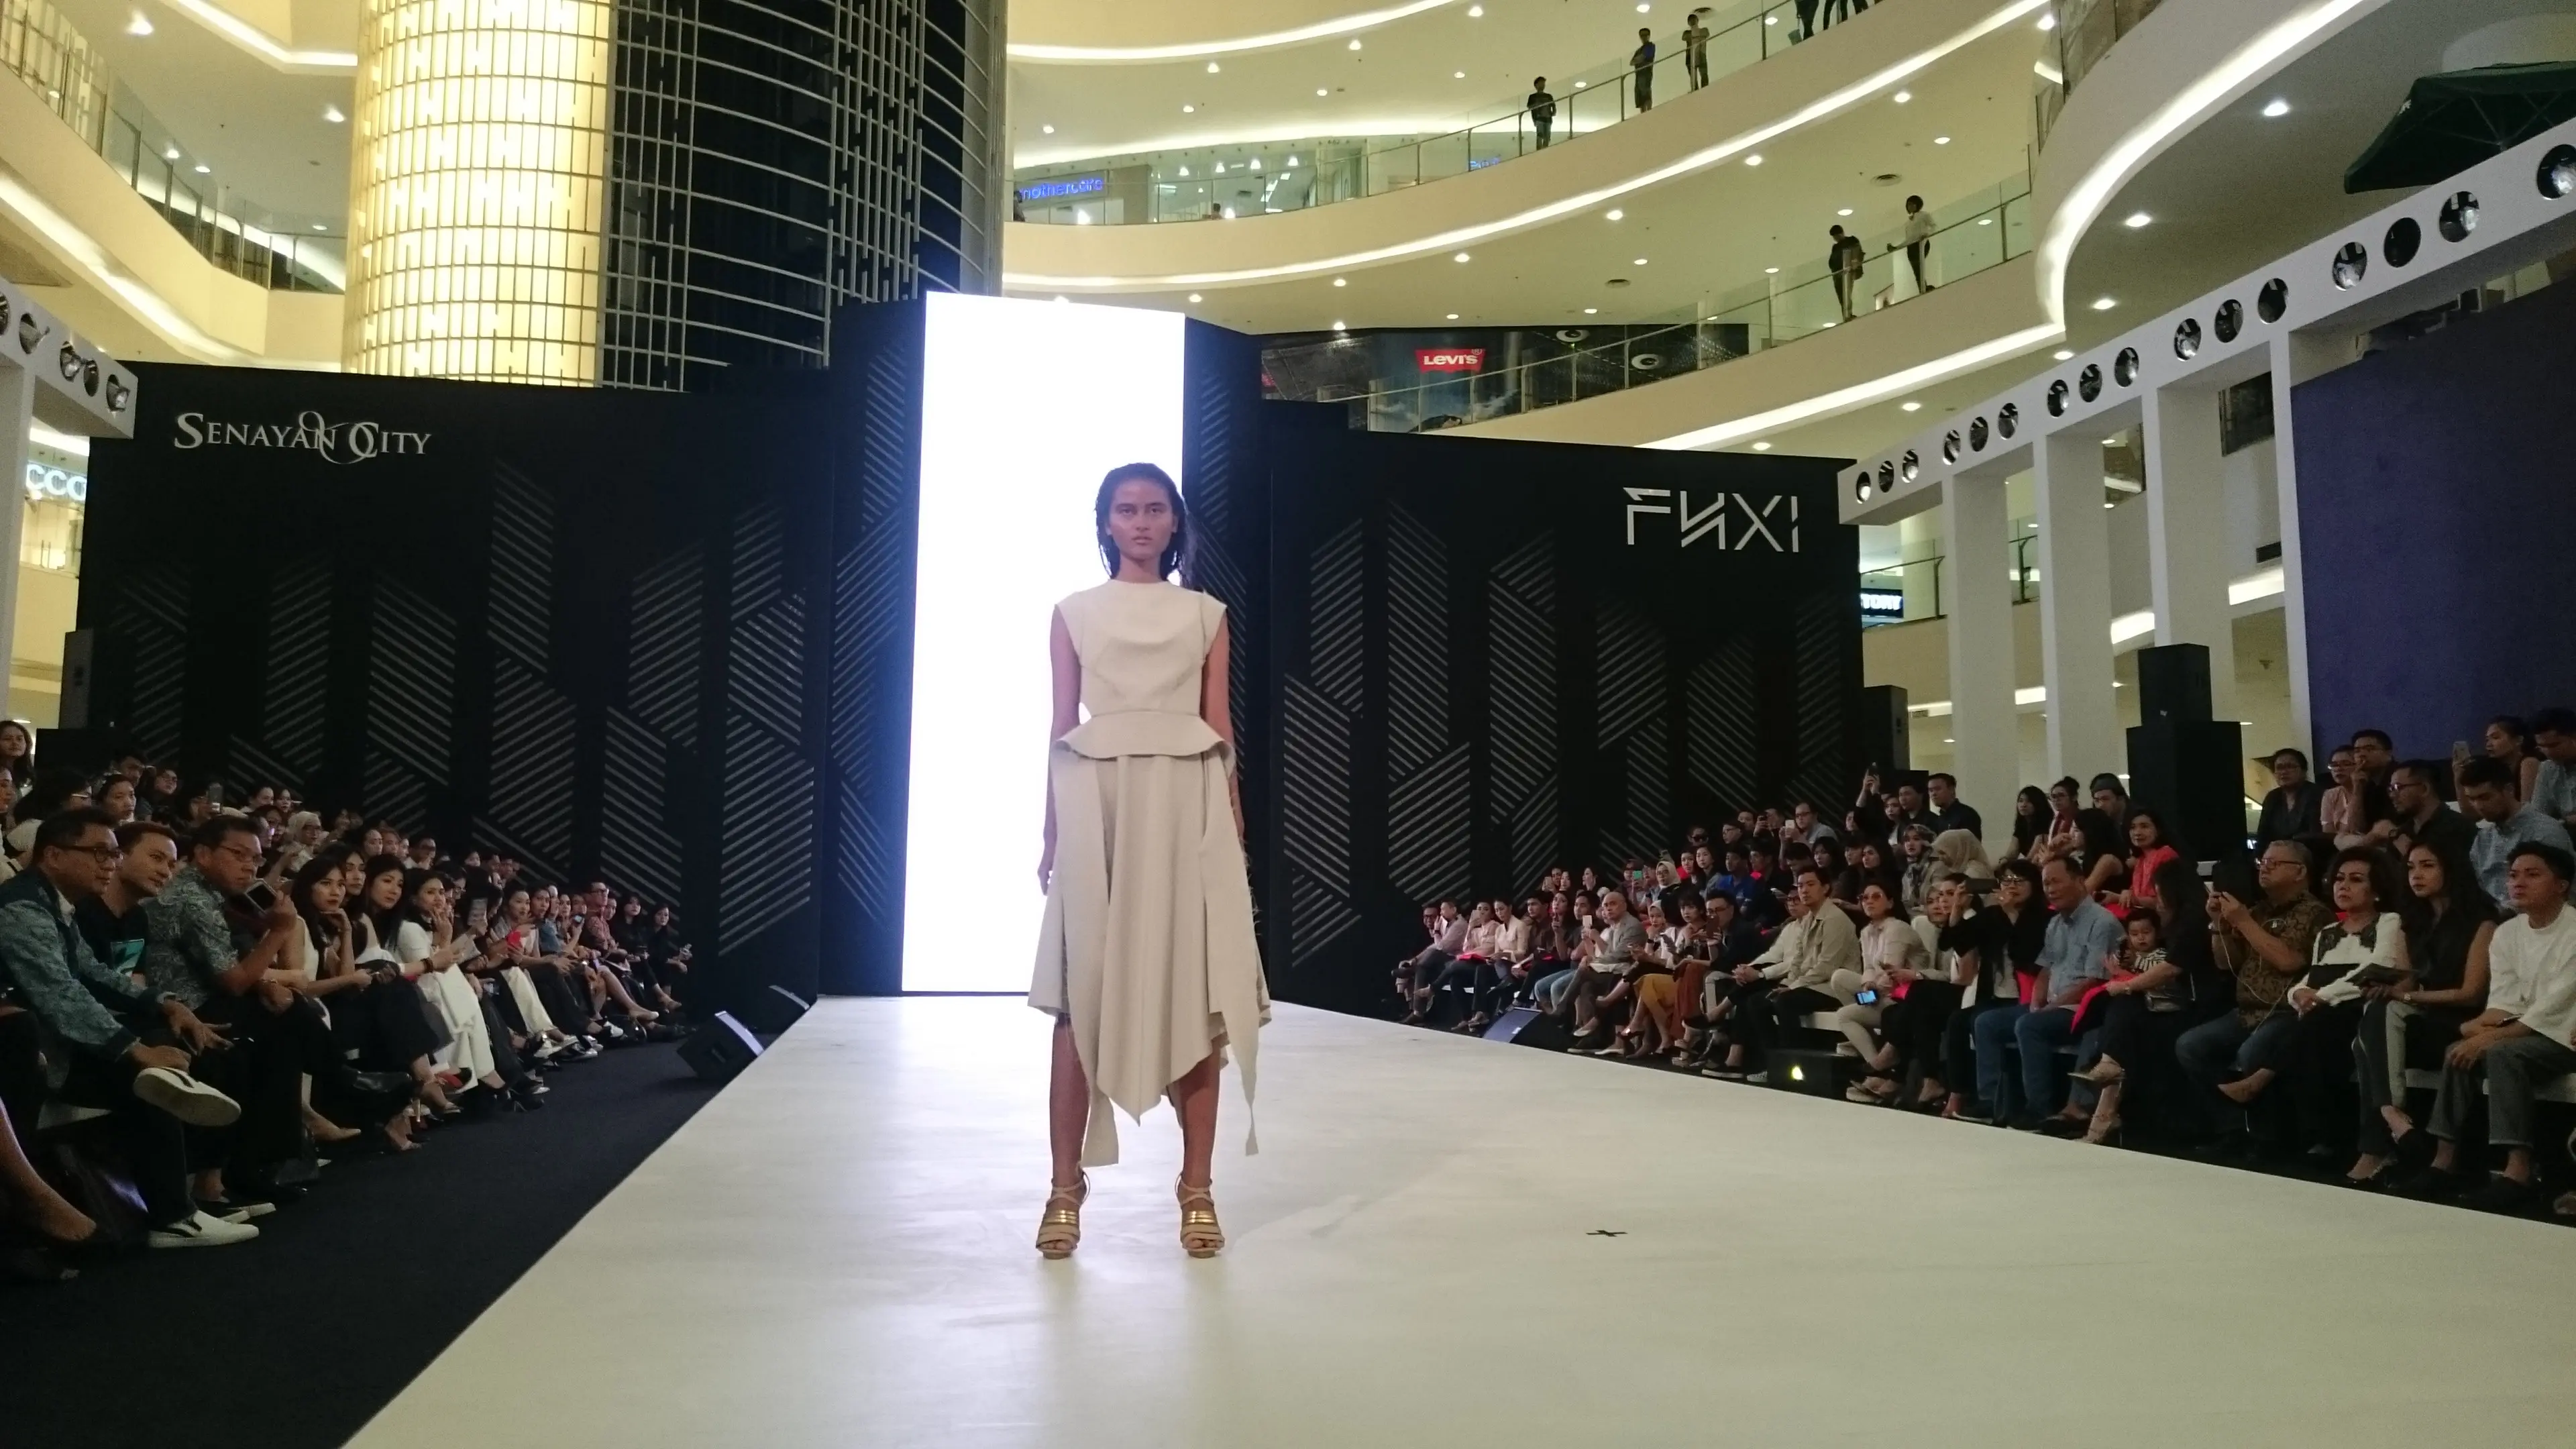 Perusahaan retail Madein berkolaborasi dengan brand fashion Tangan menghasilkan koleksi memesona bertajuk Trinity Pada Fashion Nation 2017.